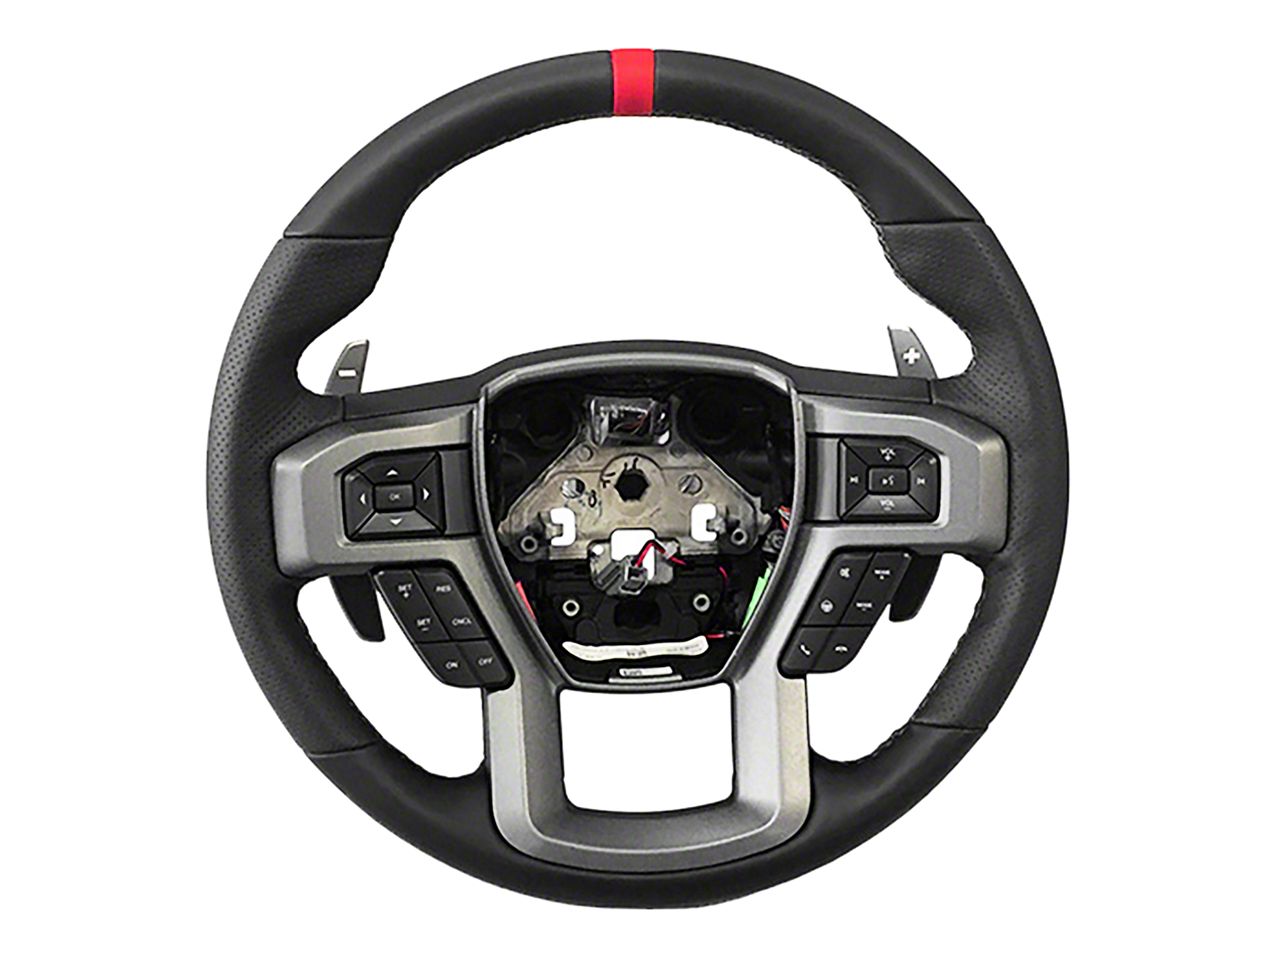 Tundra Steering Wheels & Accessories 